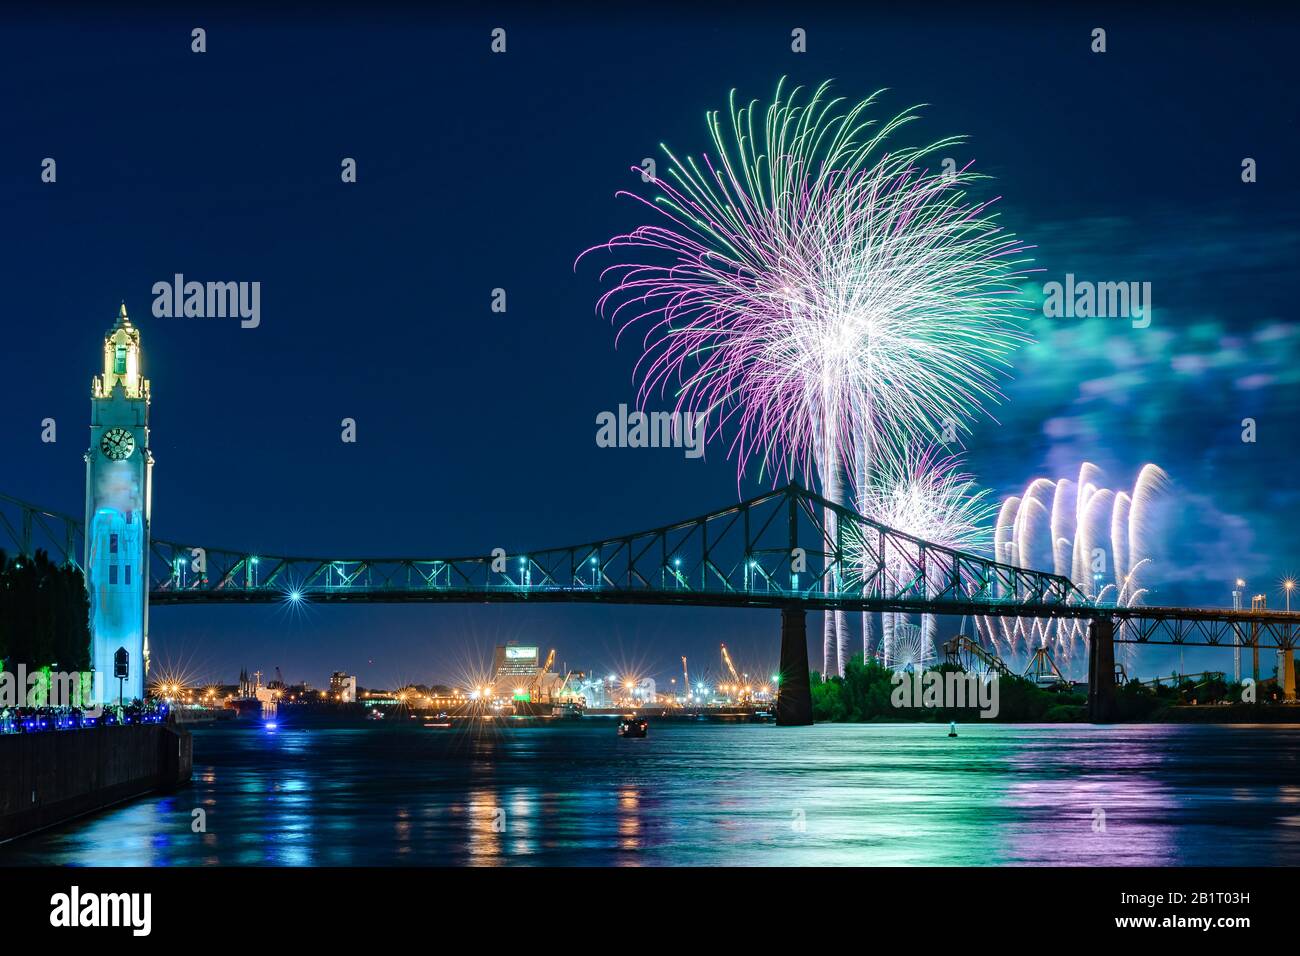 City fireworks against blue sky over a bridge Stock Photo